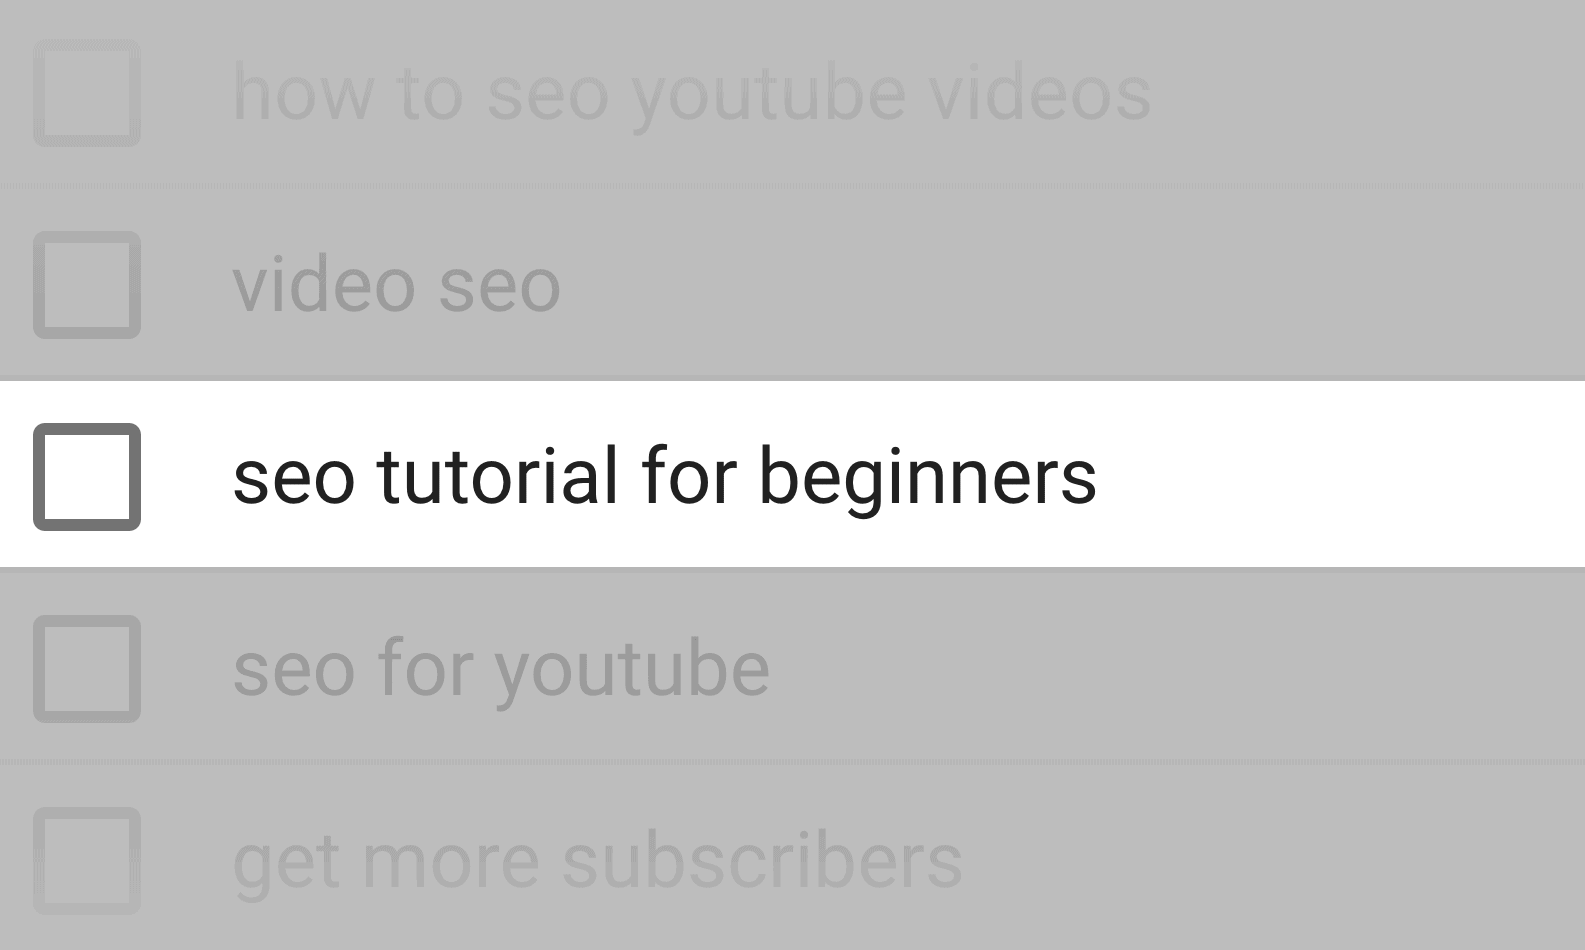 "seo tutorial for beginners" keyword highlight